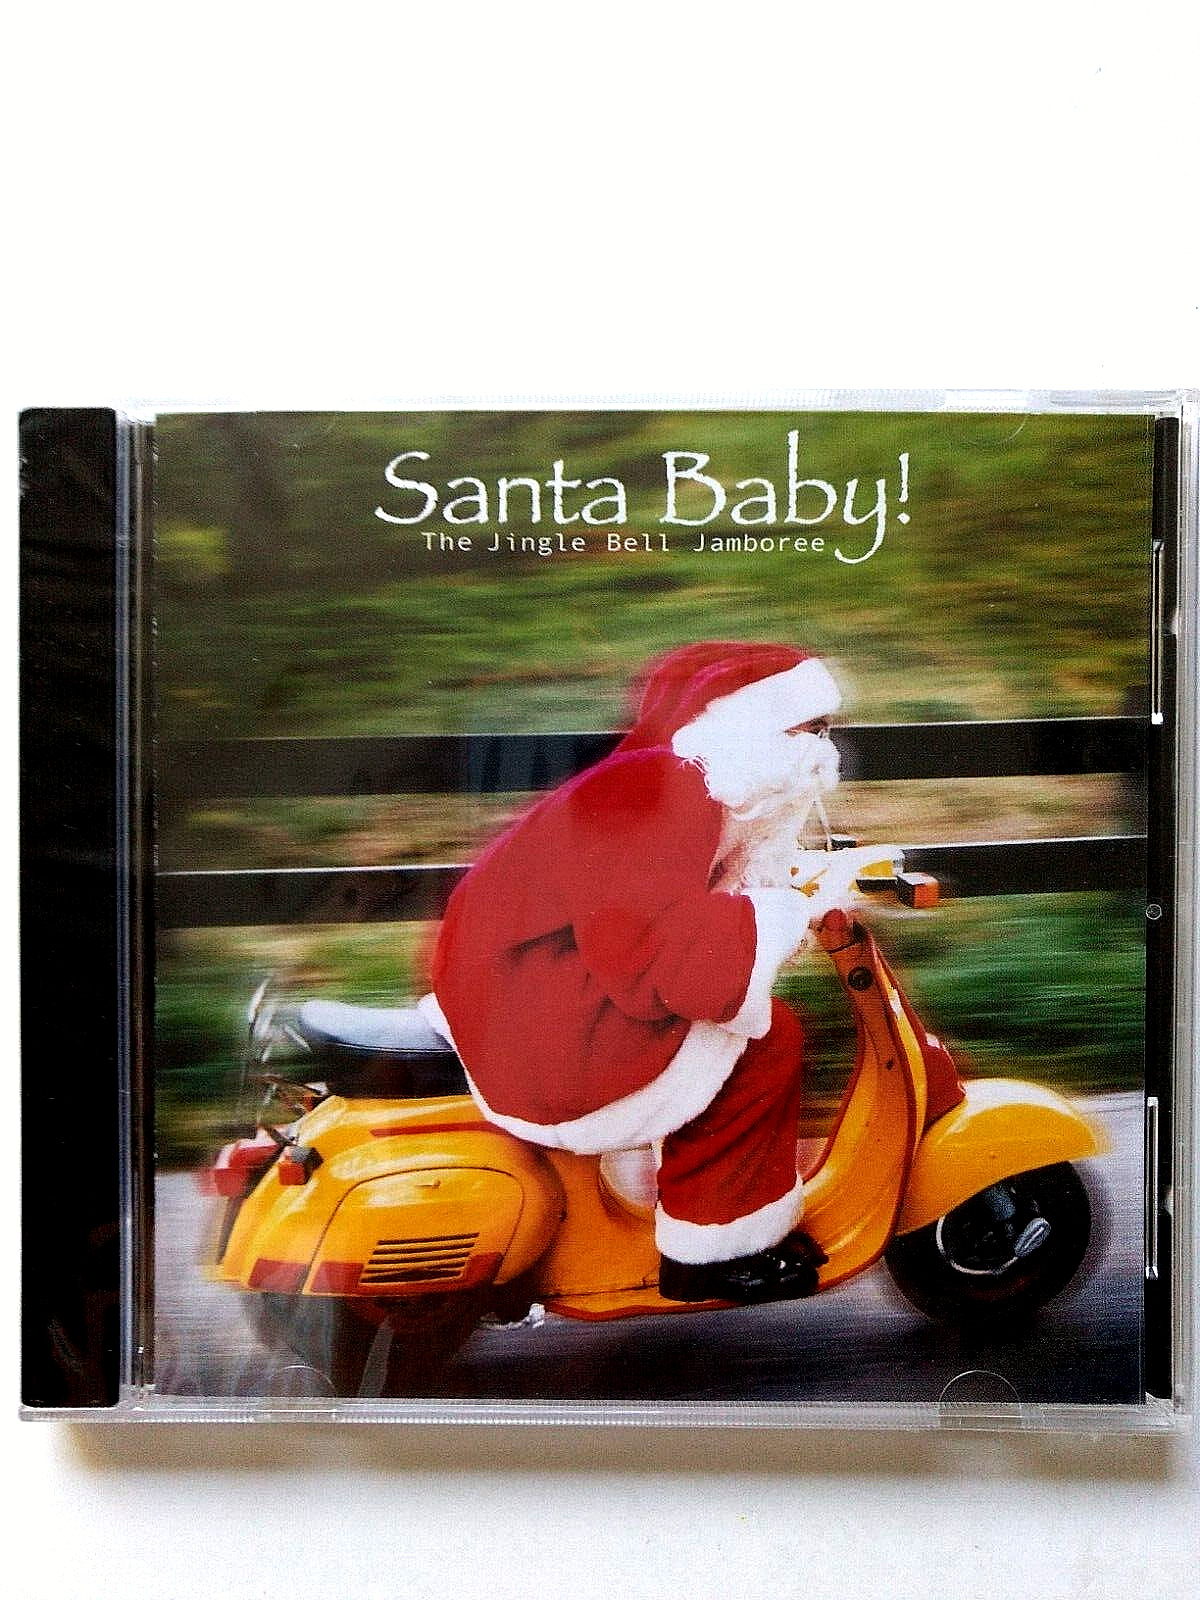 SANTA BABY The Jingle Bell Jamboree CD World Market 2002